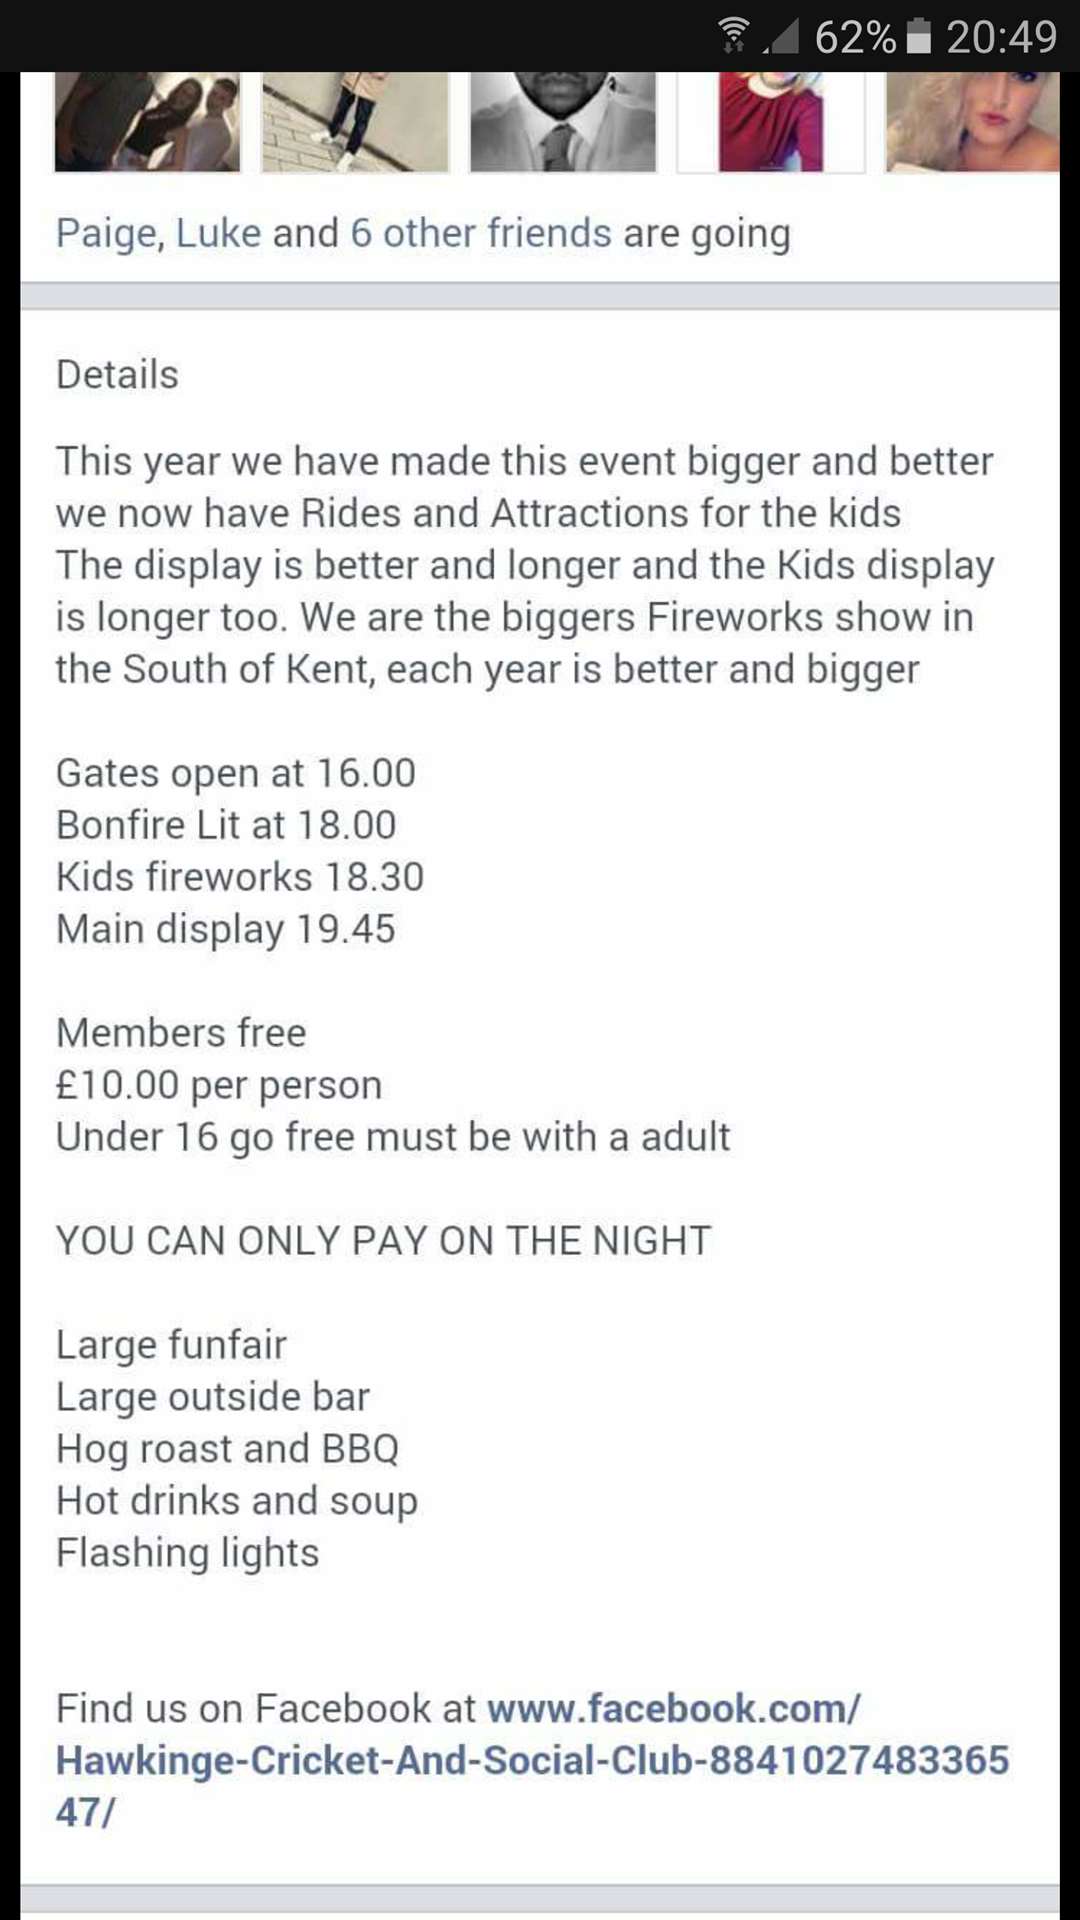 Hawkinge Cricket Club's Facebook posting promoting its firework display